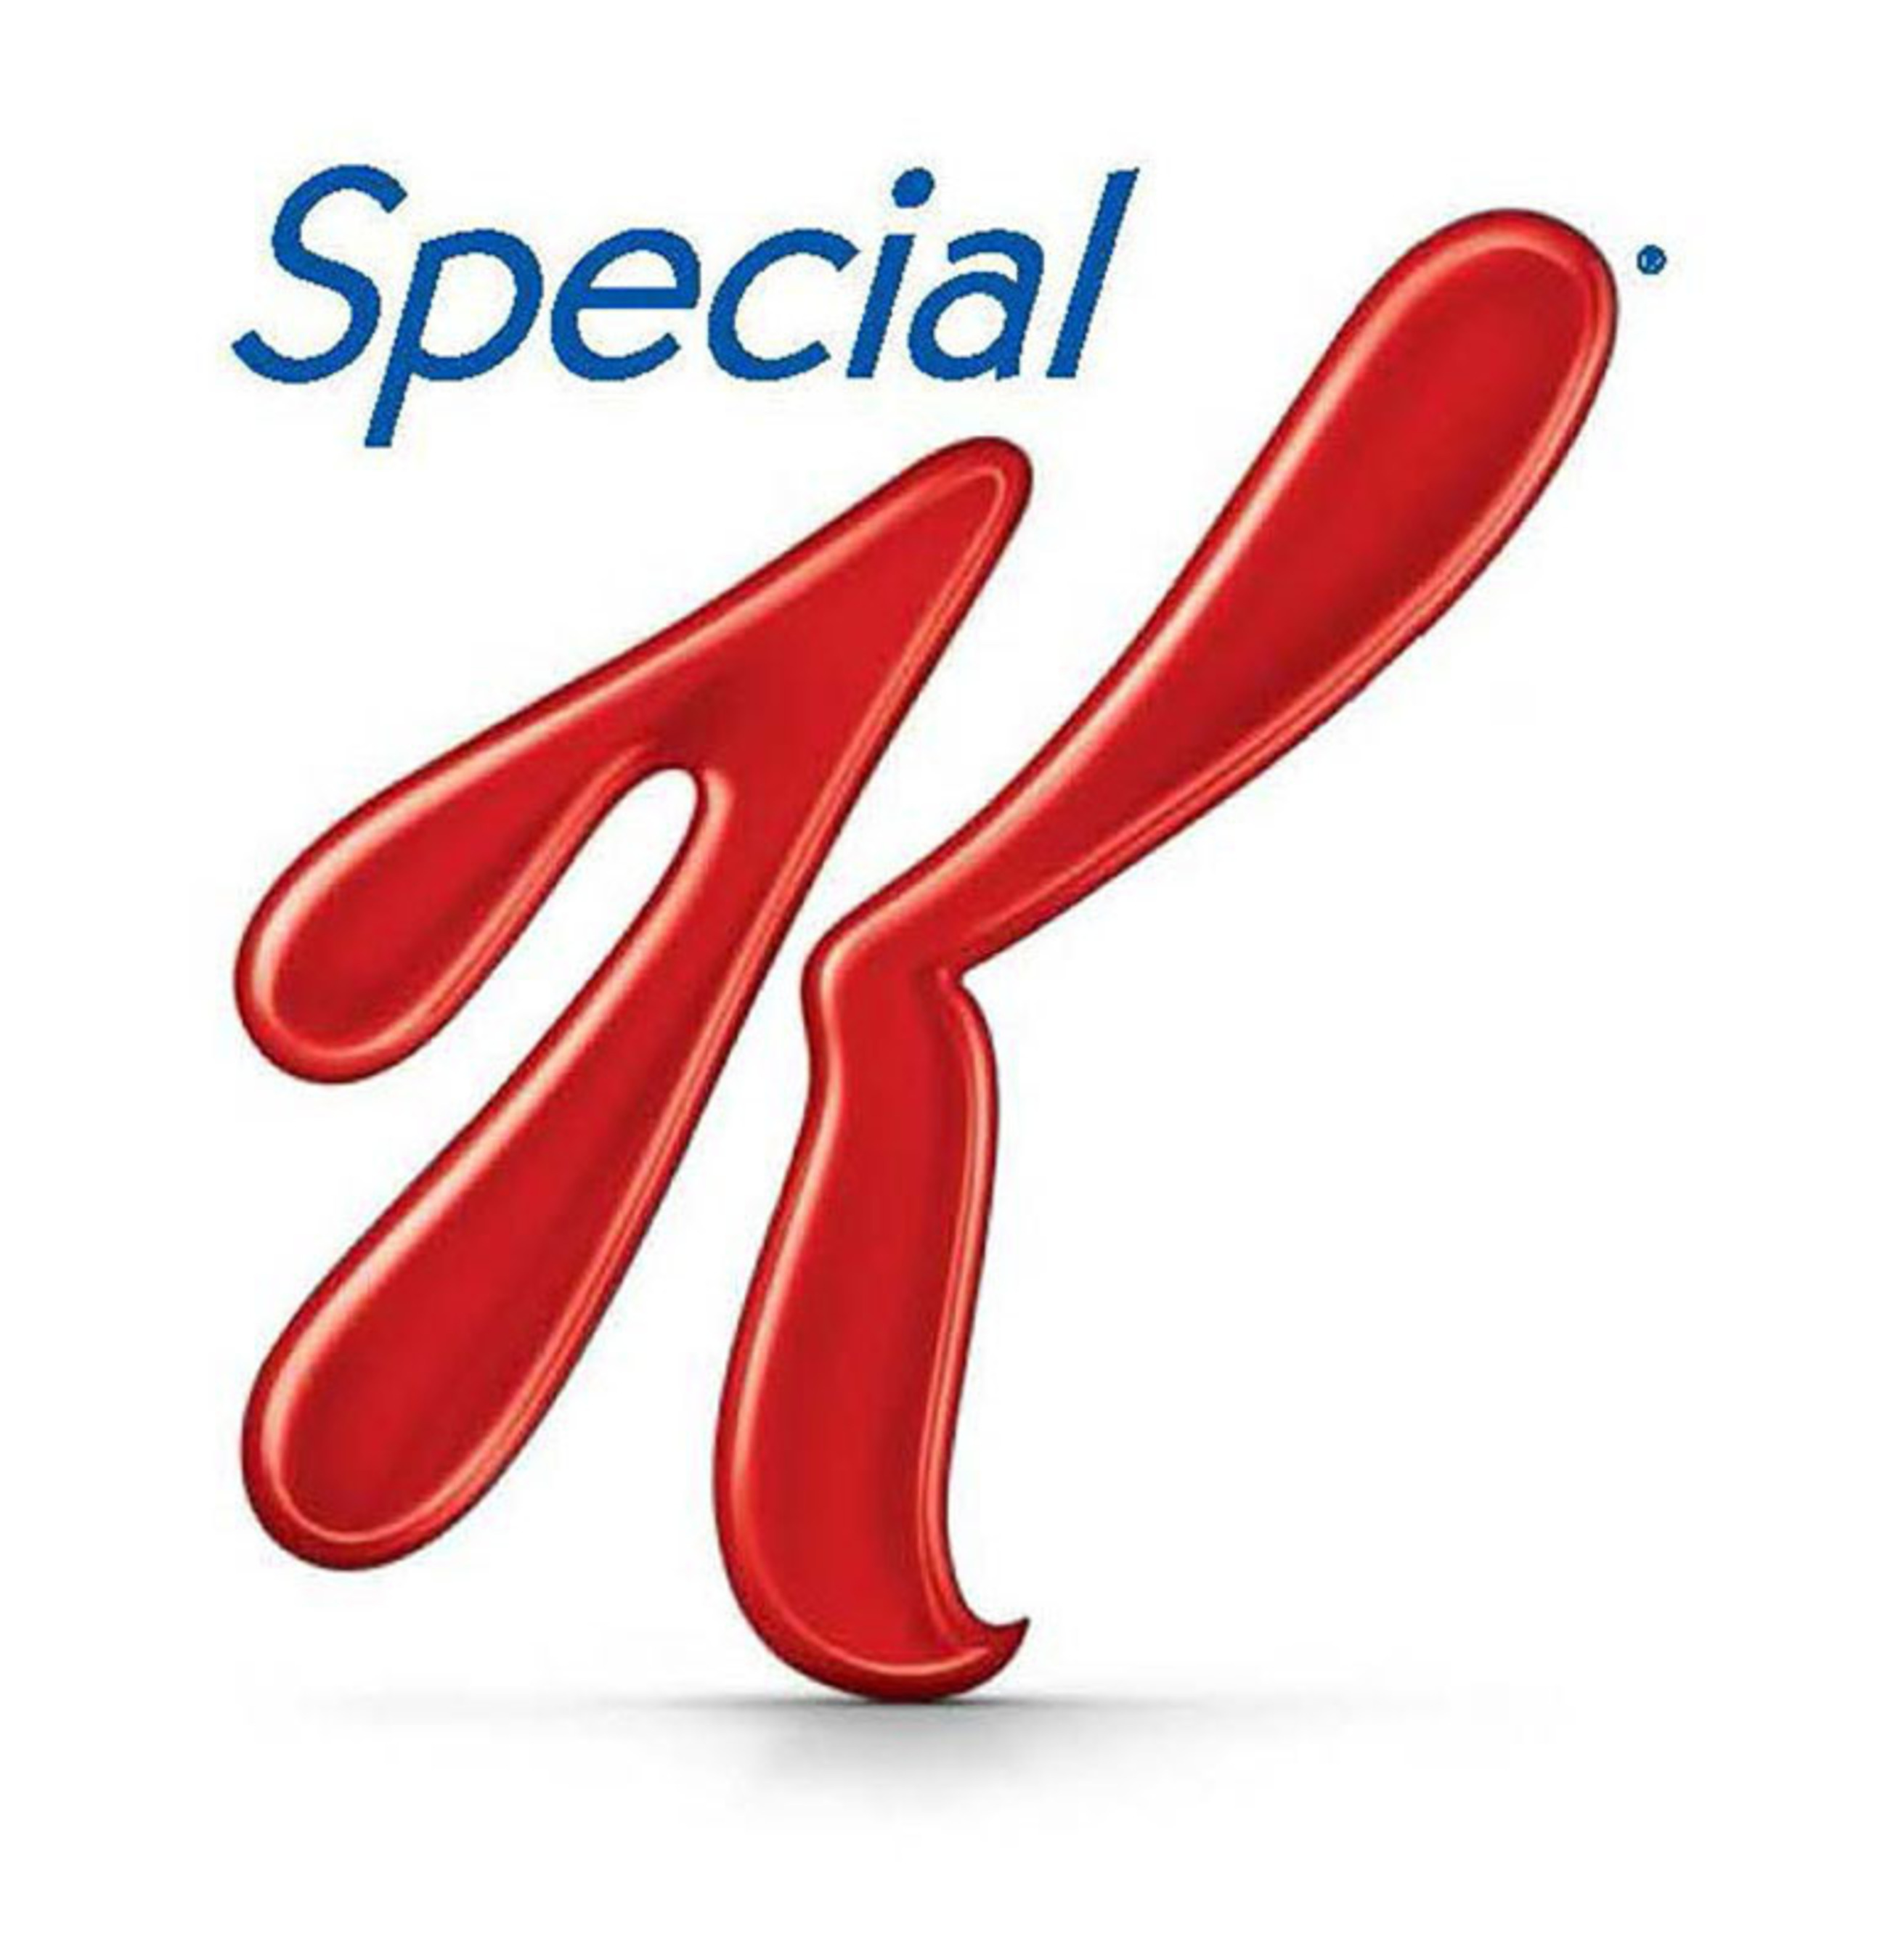 Special K. (PRNewsFoto/Kellogg Company) (PRNewsFoto/KELLOGG COMPANY)